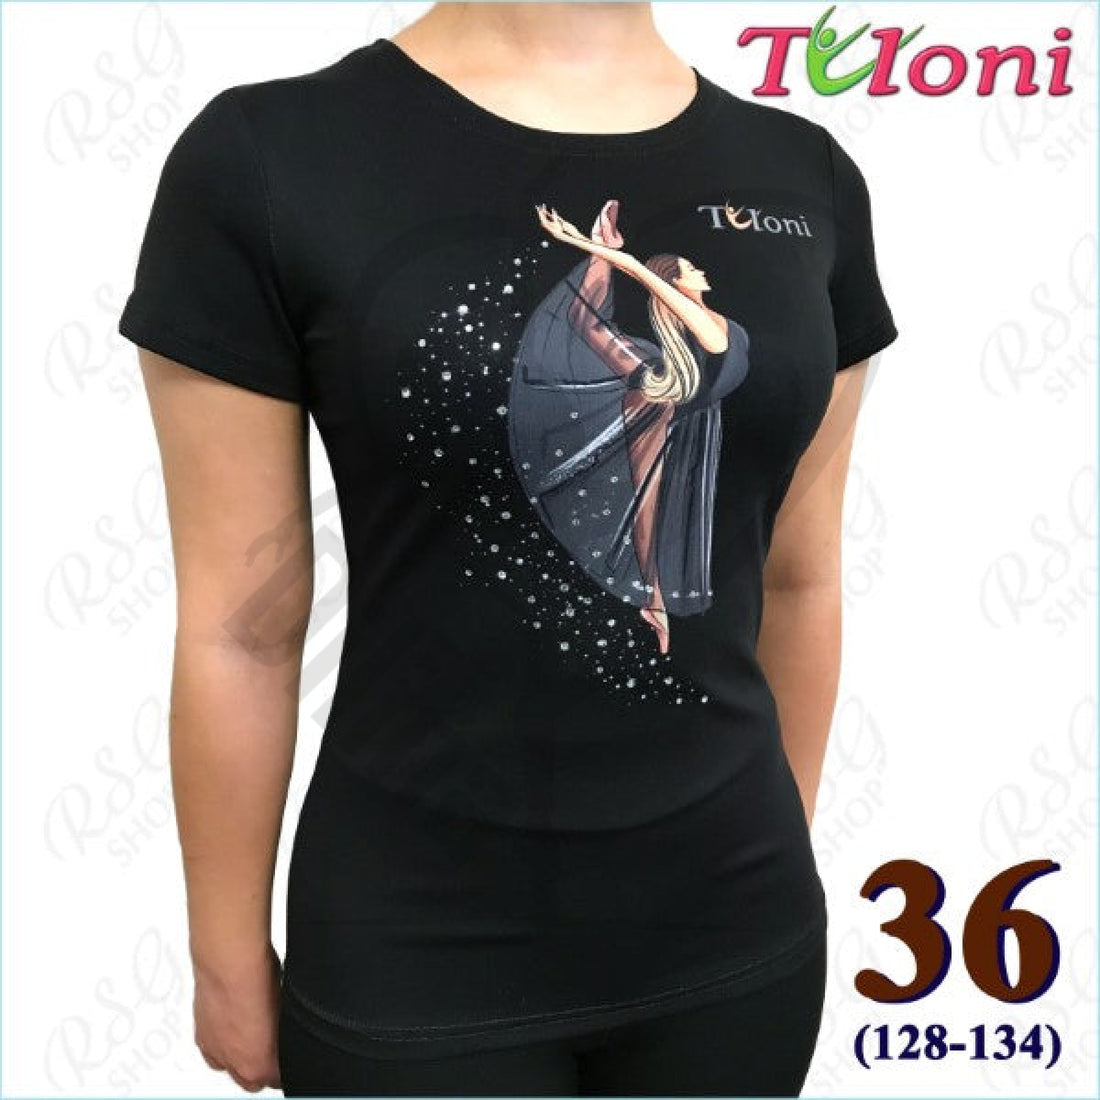 Tuloni Black T-Shirt Mod. Ballet 36 (128-134) T Shirts & Tops